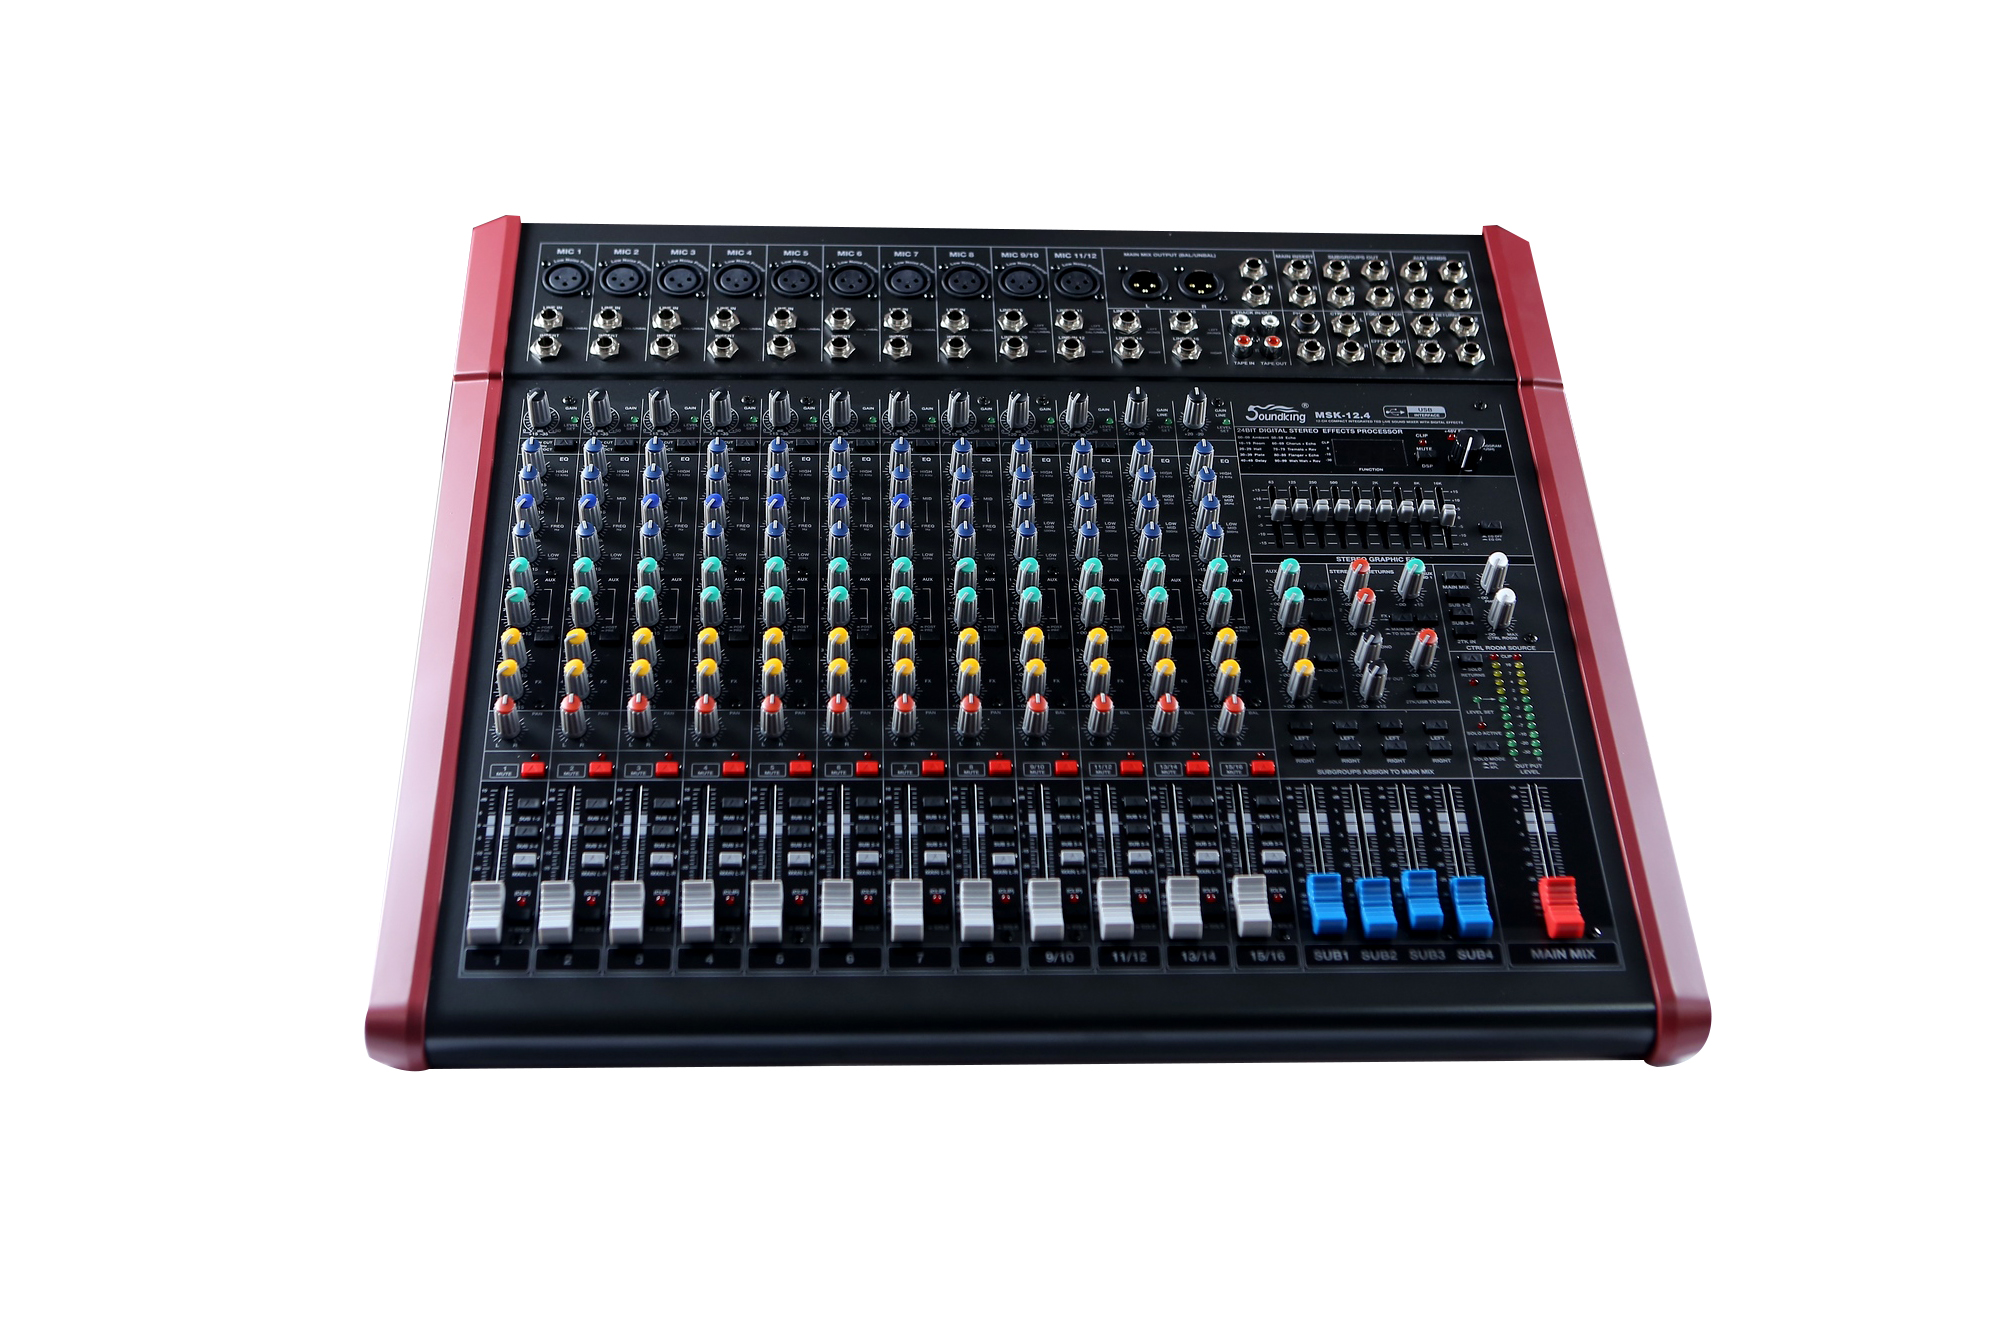 Mixer Soundking MSK16.4